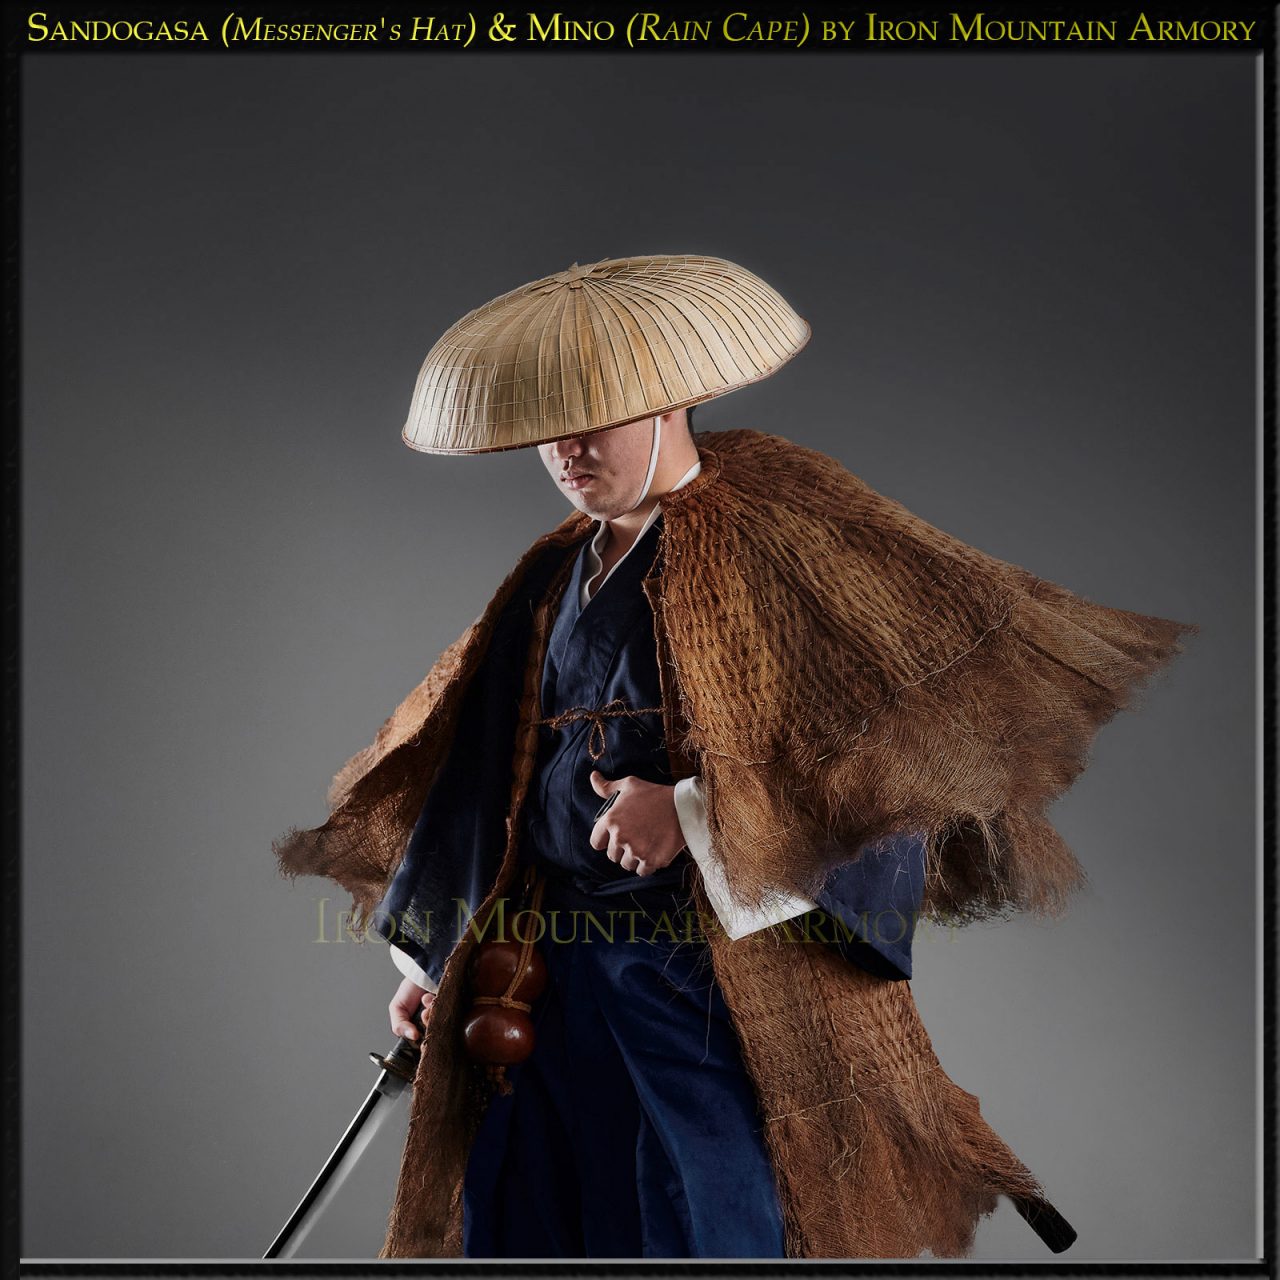 Sandogasa Archives : Samurai Armor and Accessories